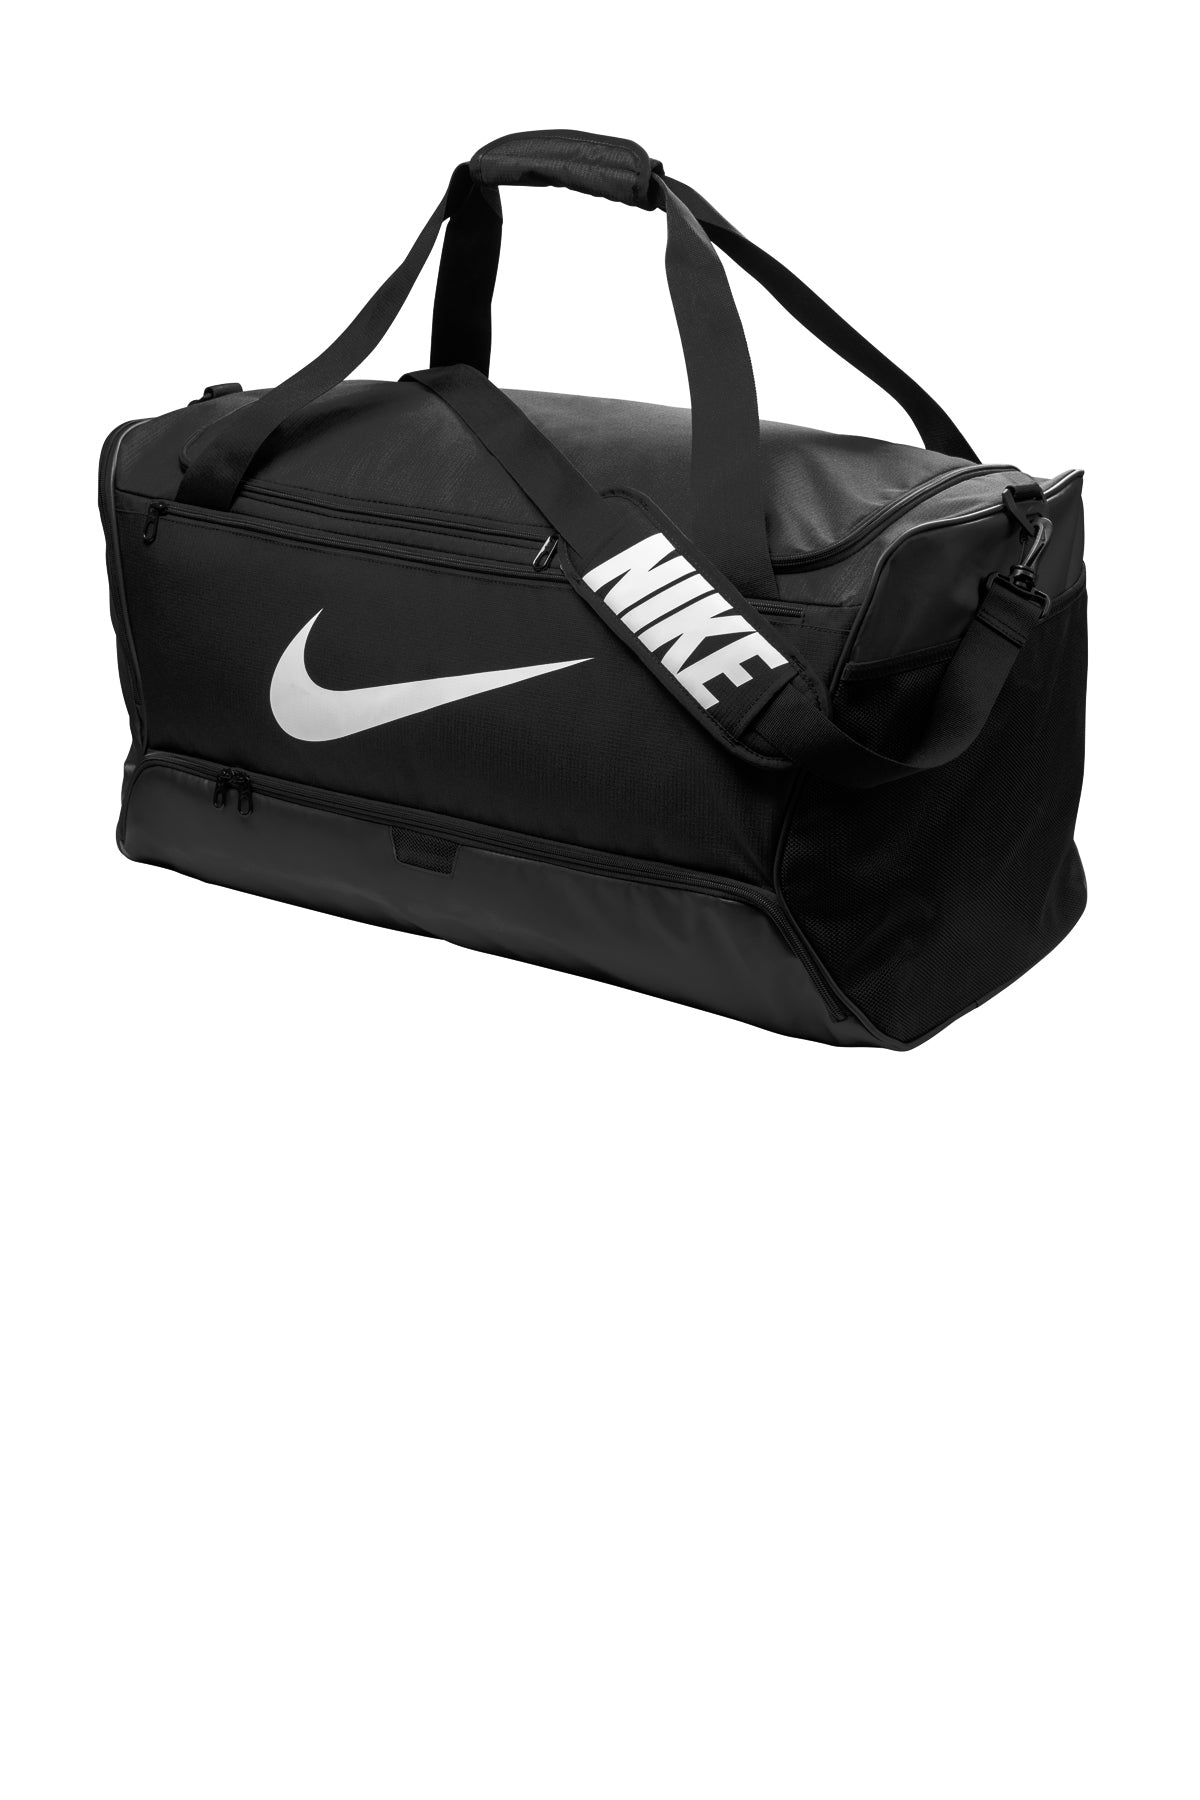 Nike Brasilia Large Custom Duffels, Black